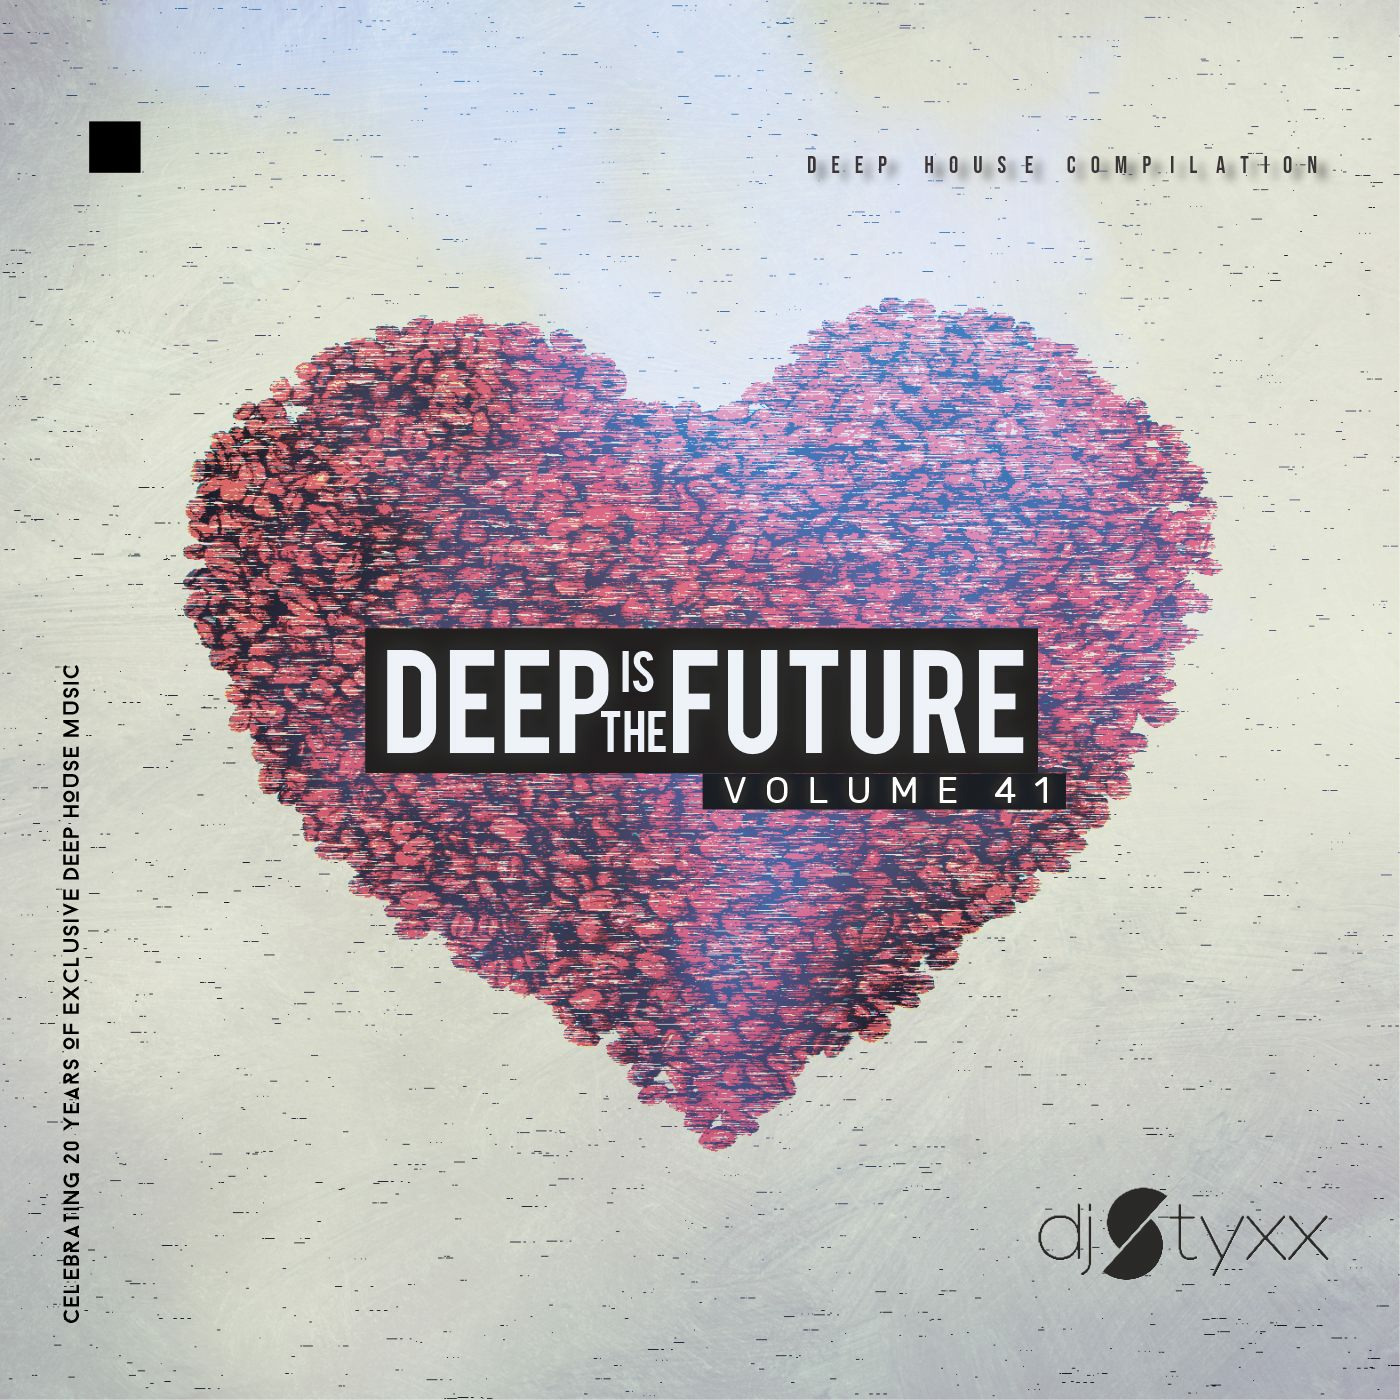 Styxx - Deep is the Future (Vol.41)